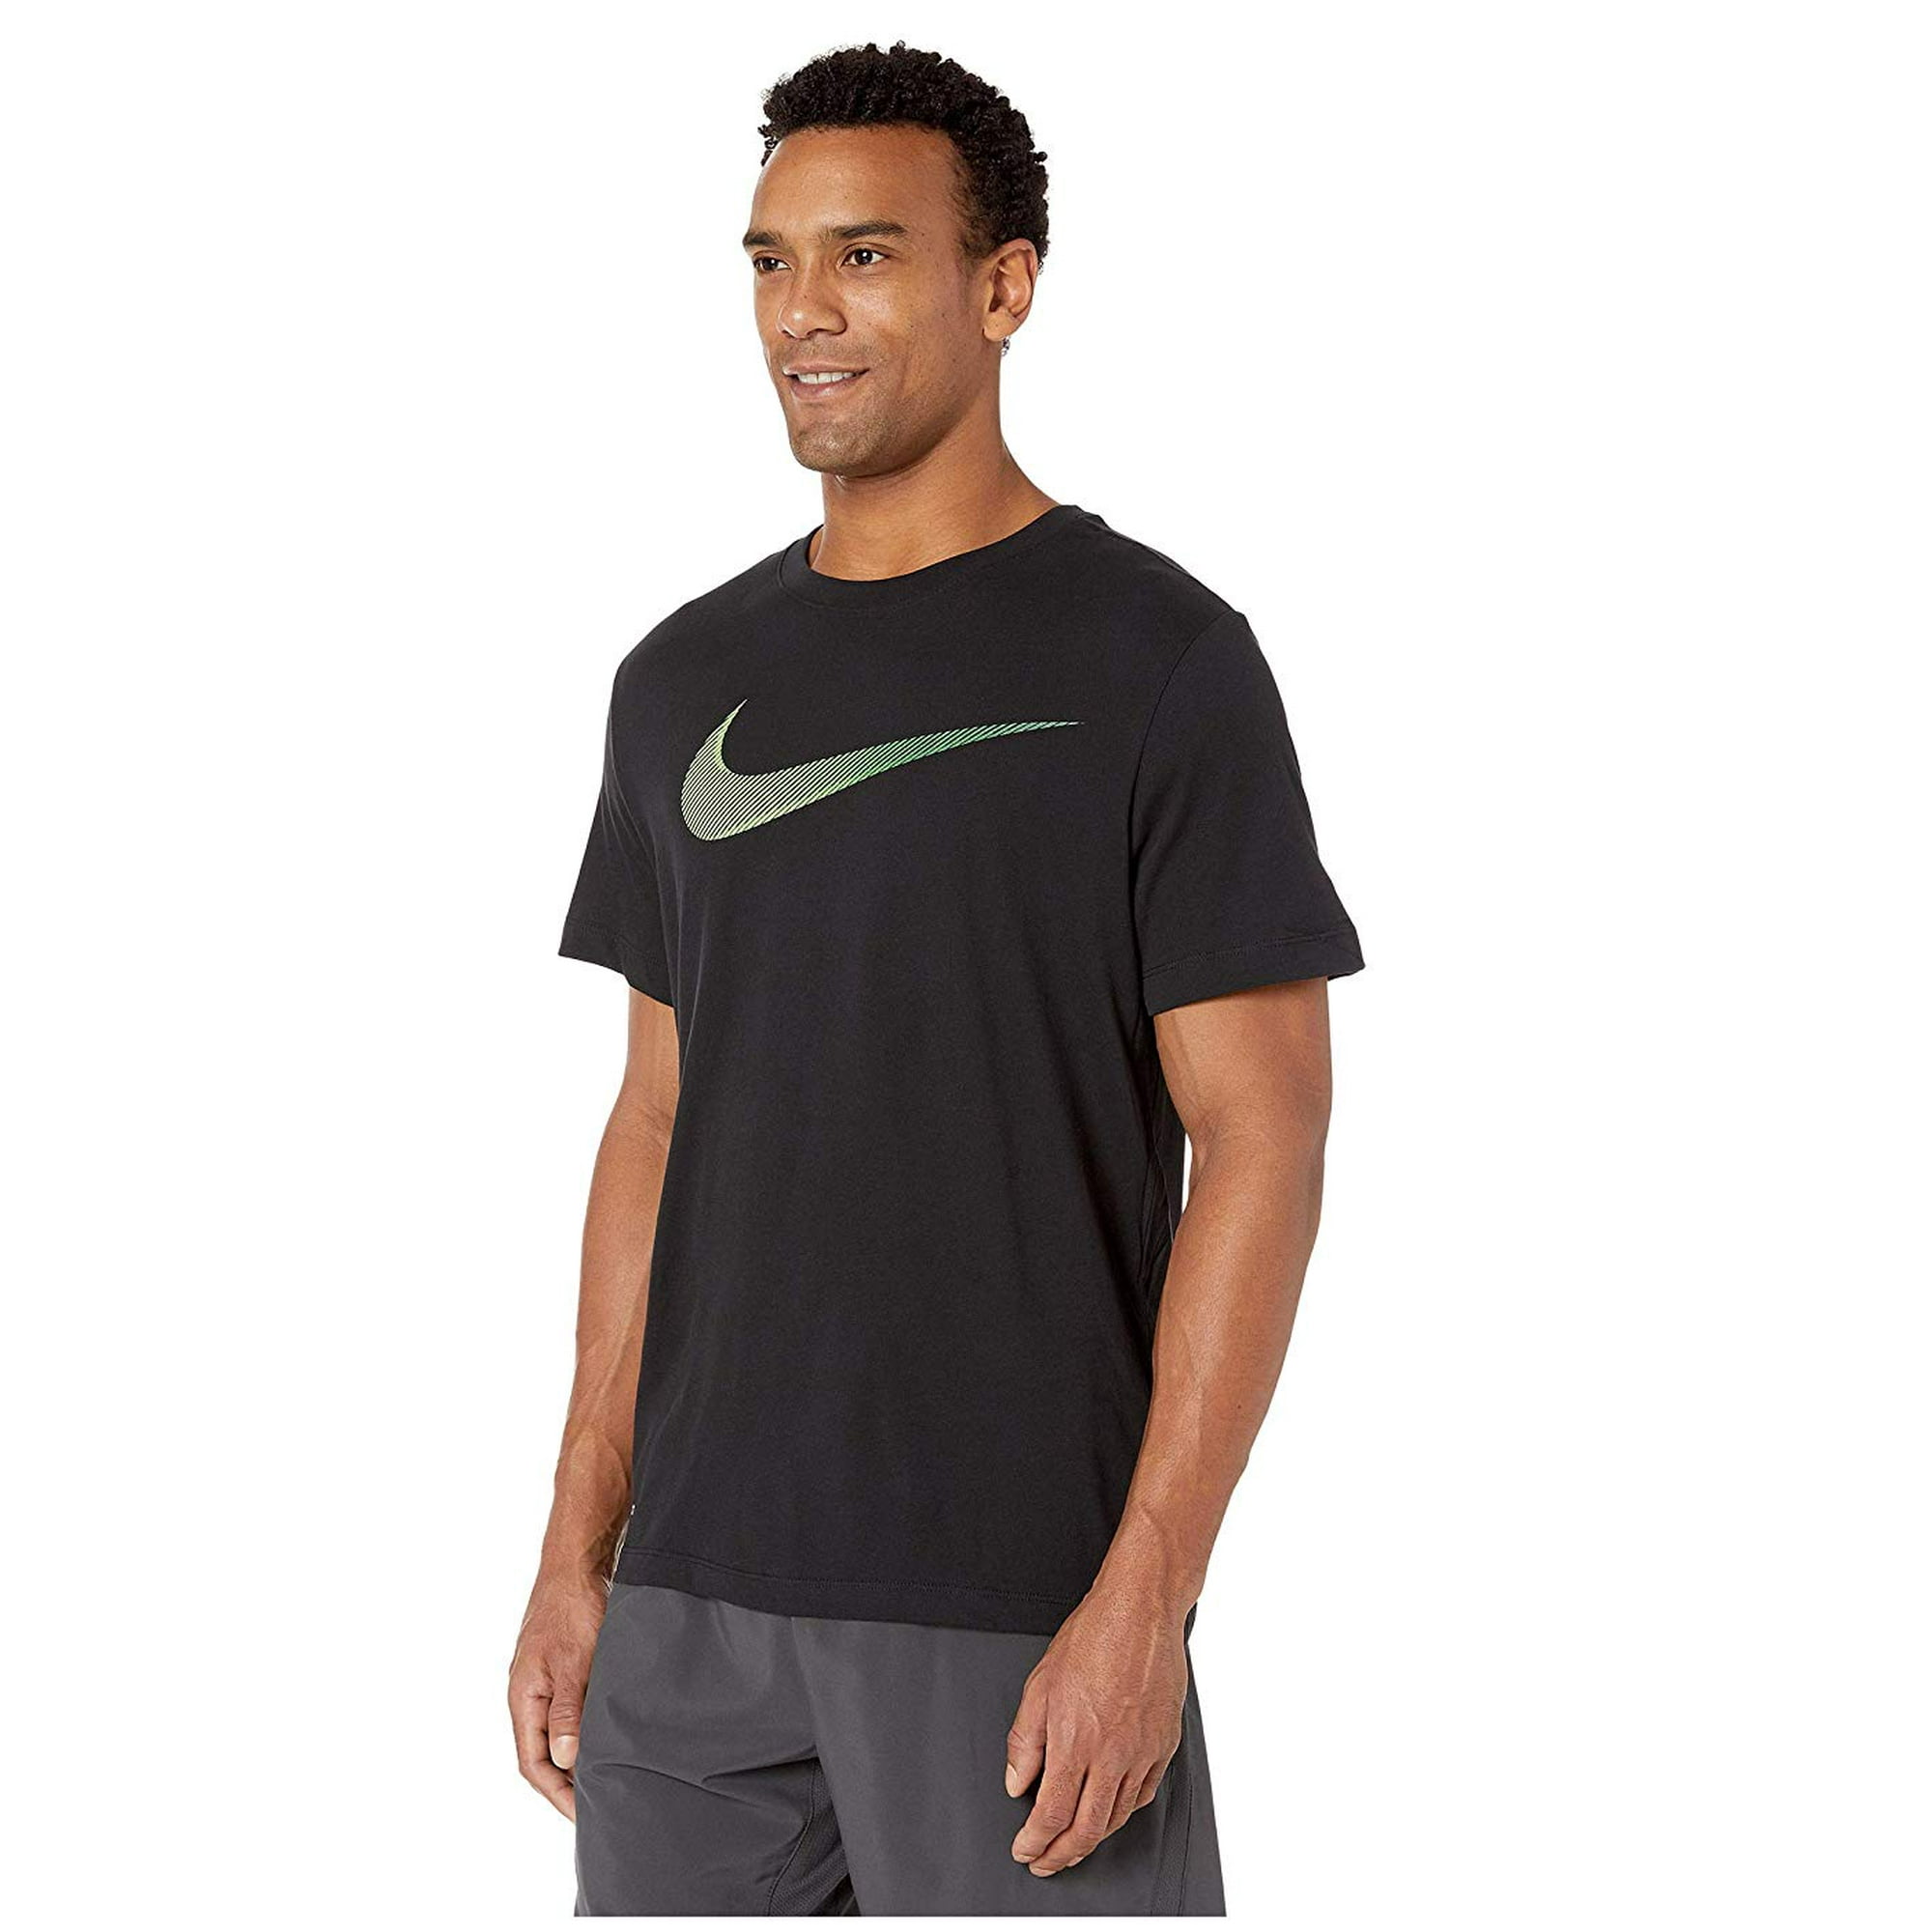 Nike Men's Shirt - Black - XXL